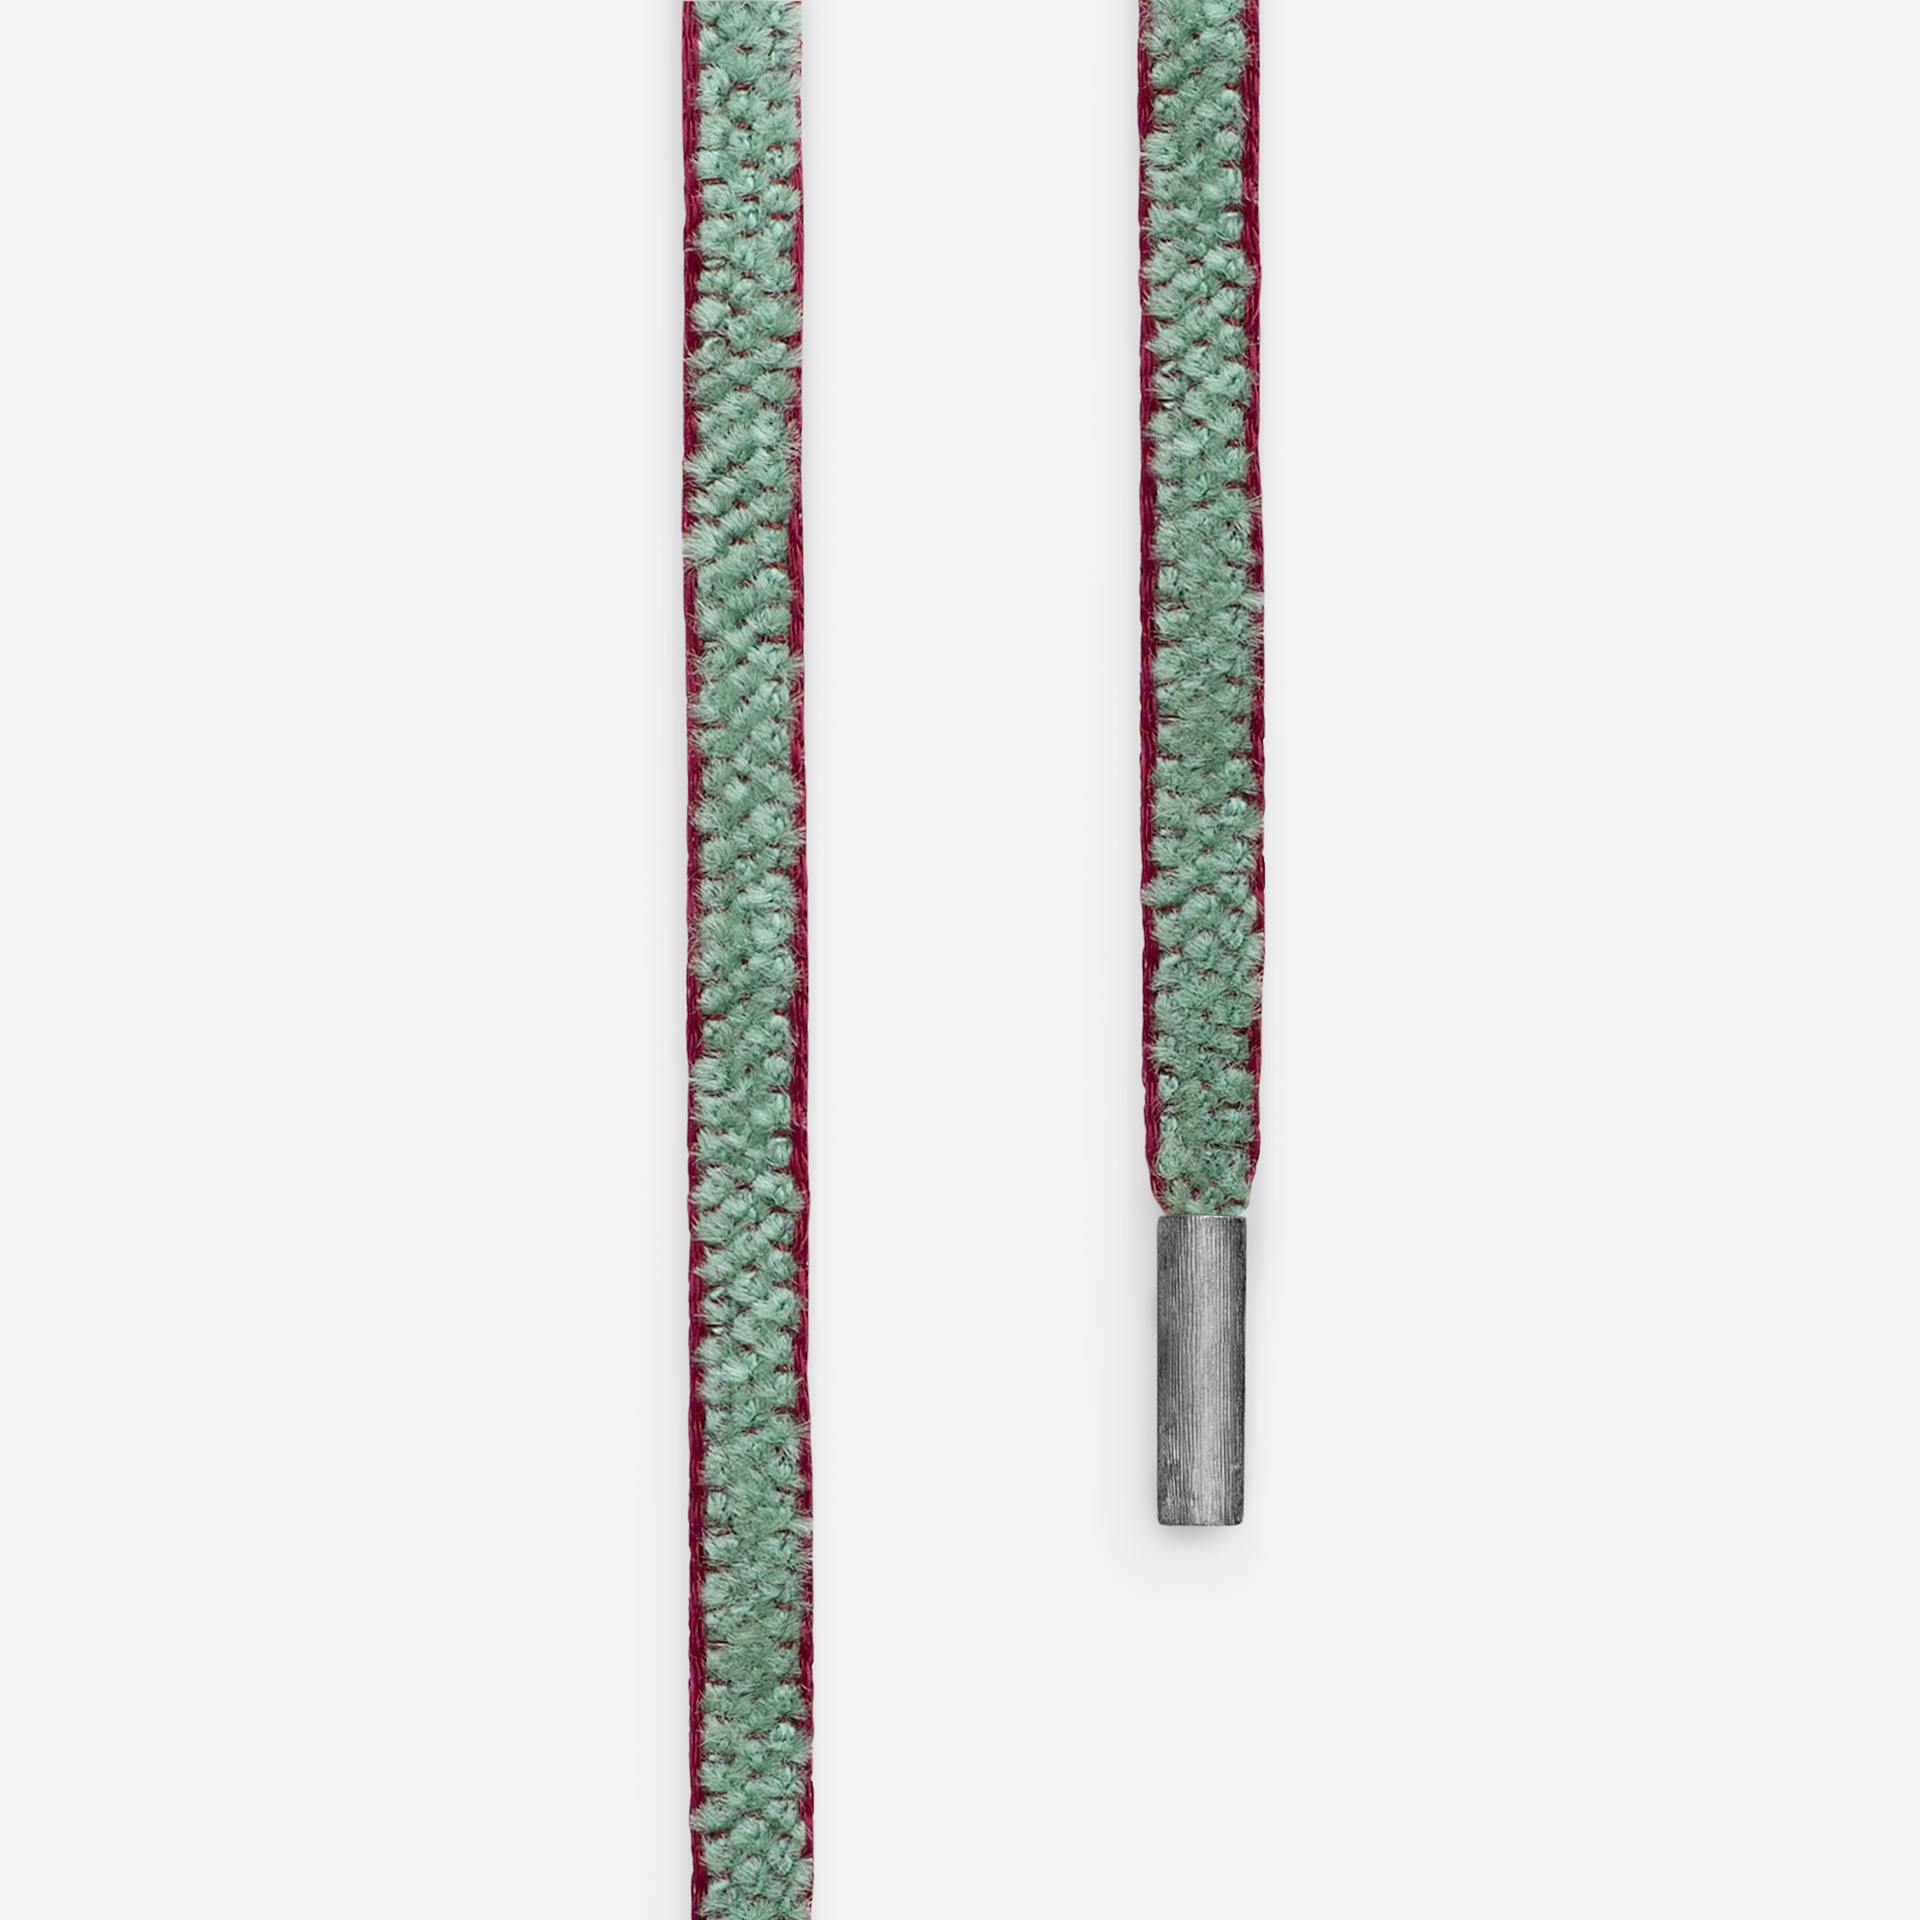 Chenille Mokuba Silk String Necklace with Oxidized Sterling Silver End Pieces  |  Ole Lynggaard Copenhagen    